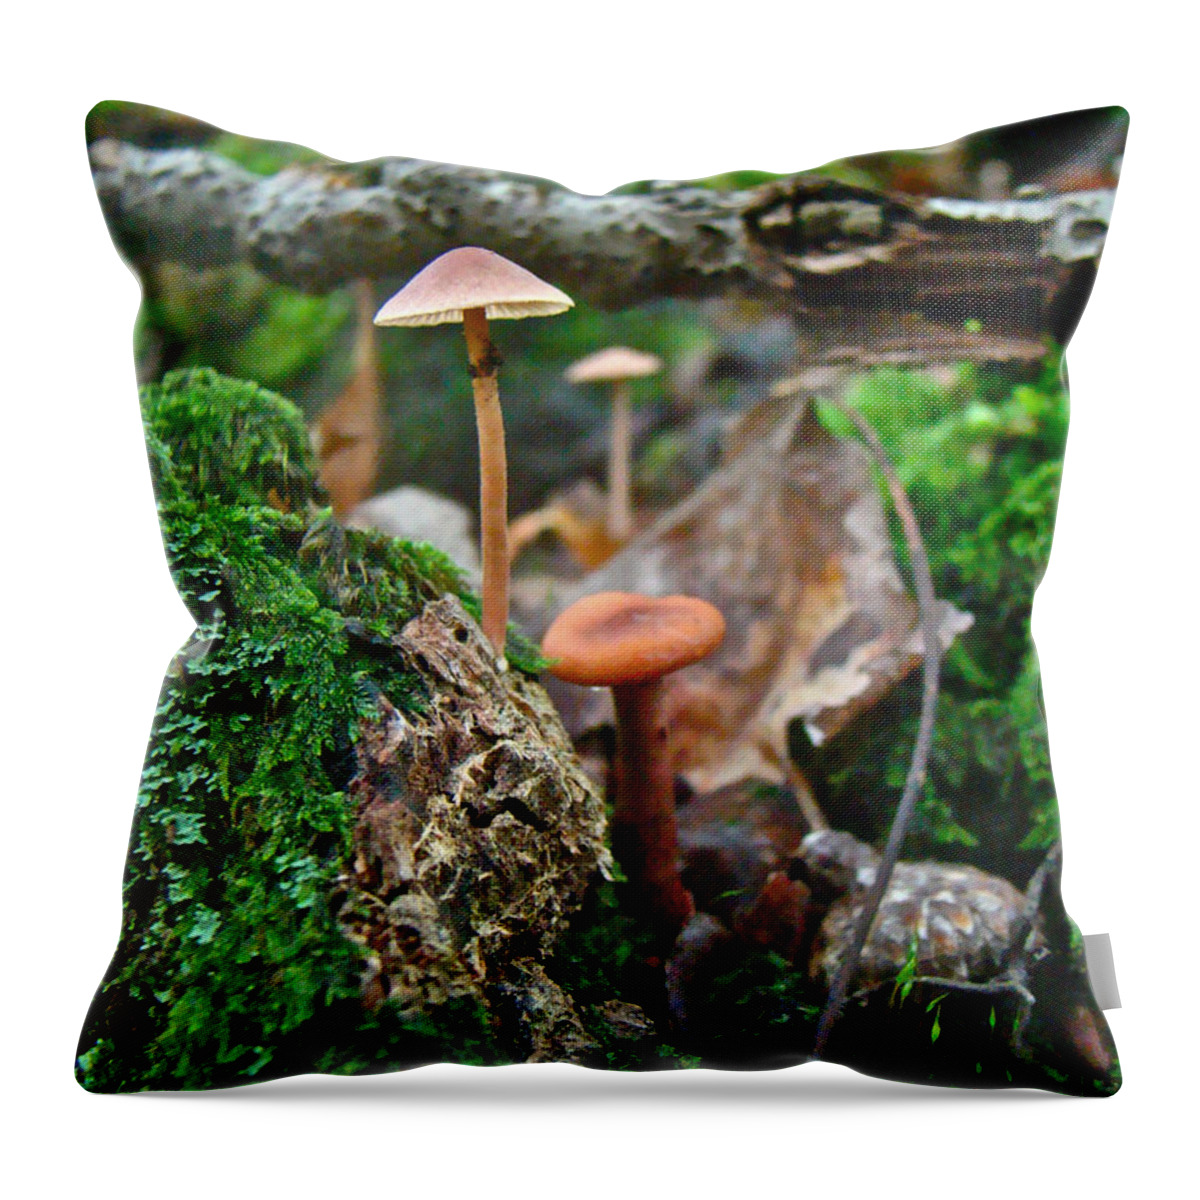 Mushrooms Throw Pillow featuring the photograph Mushroom Forest Garden by Carol Senske